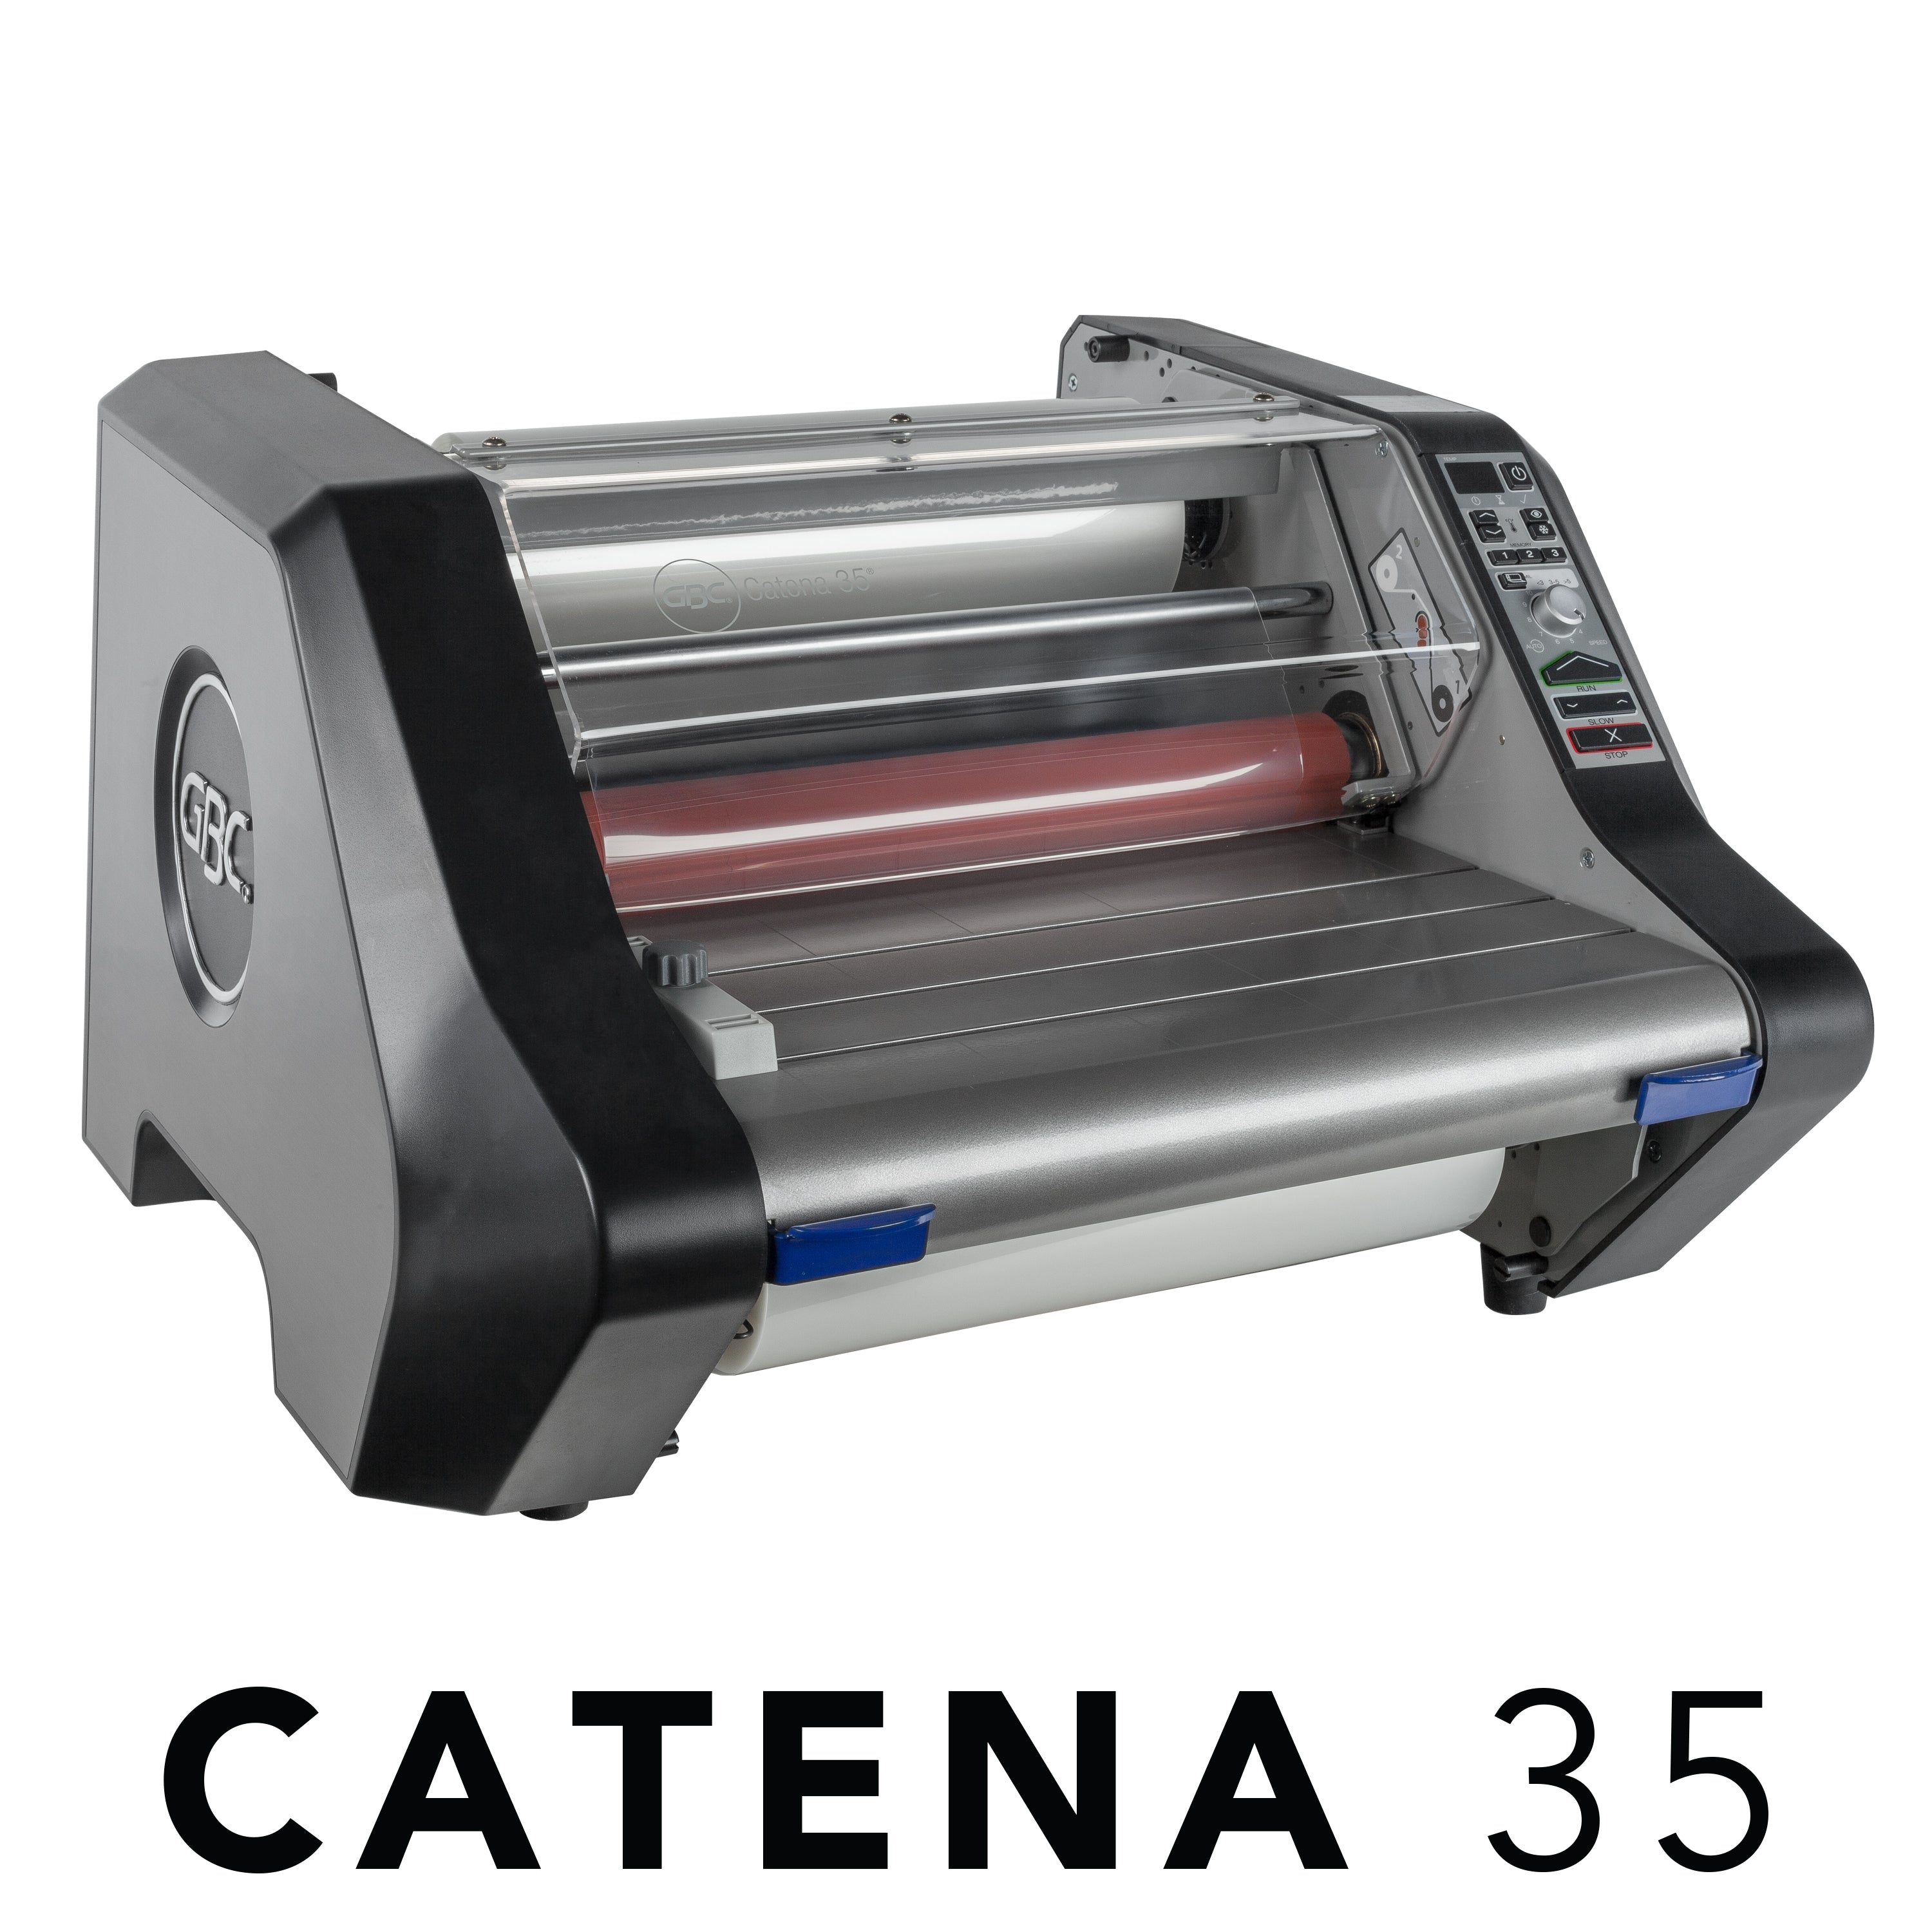 GBC Catena 35 - 12'' Thermal Roll Laminator